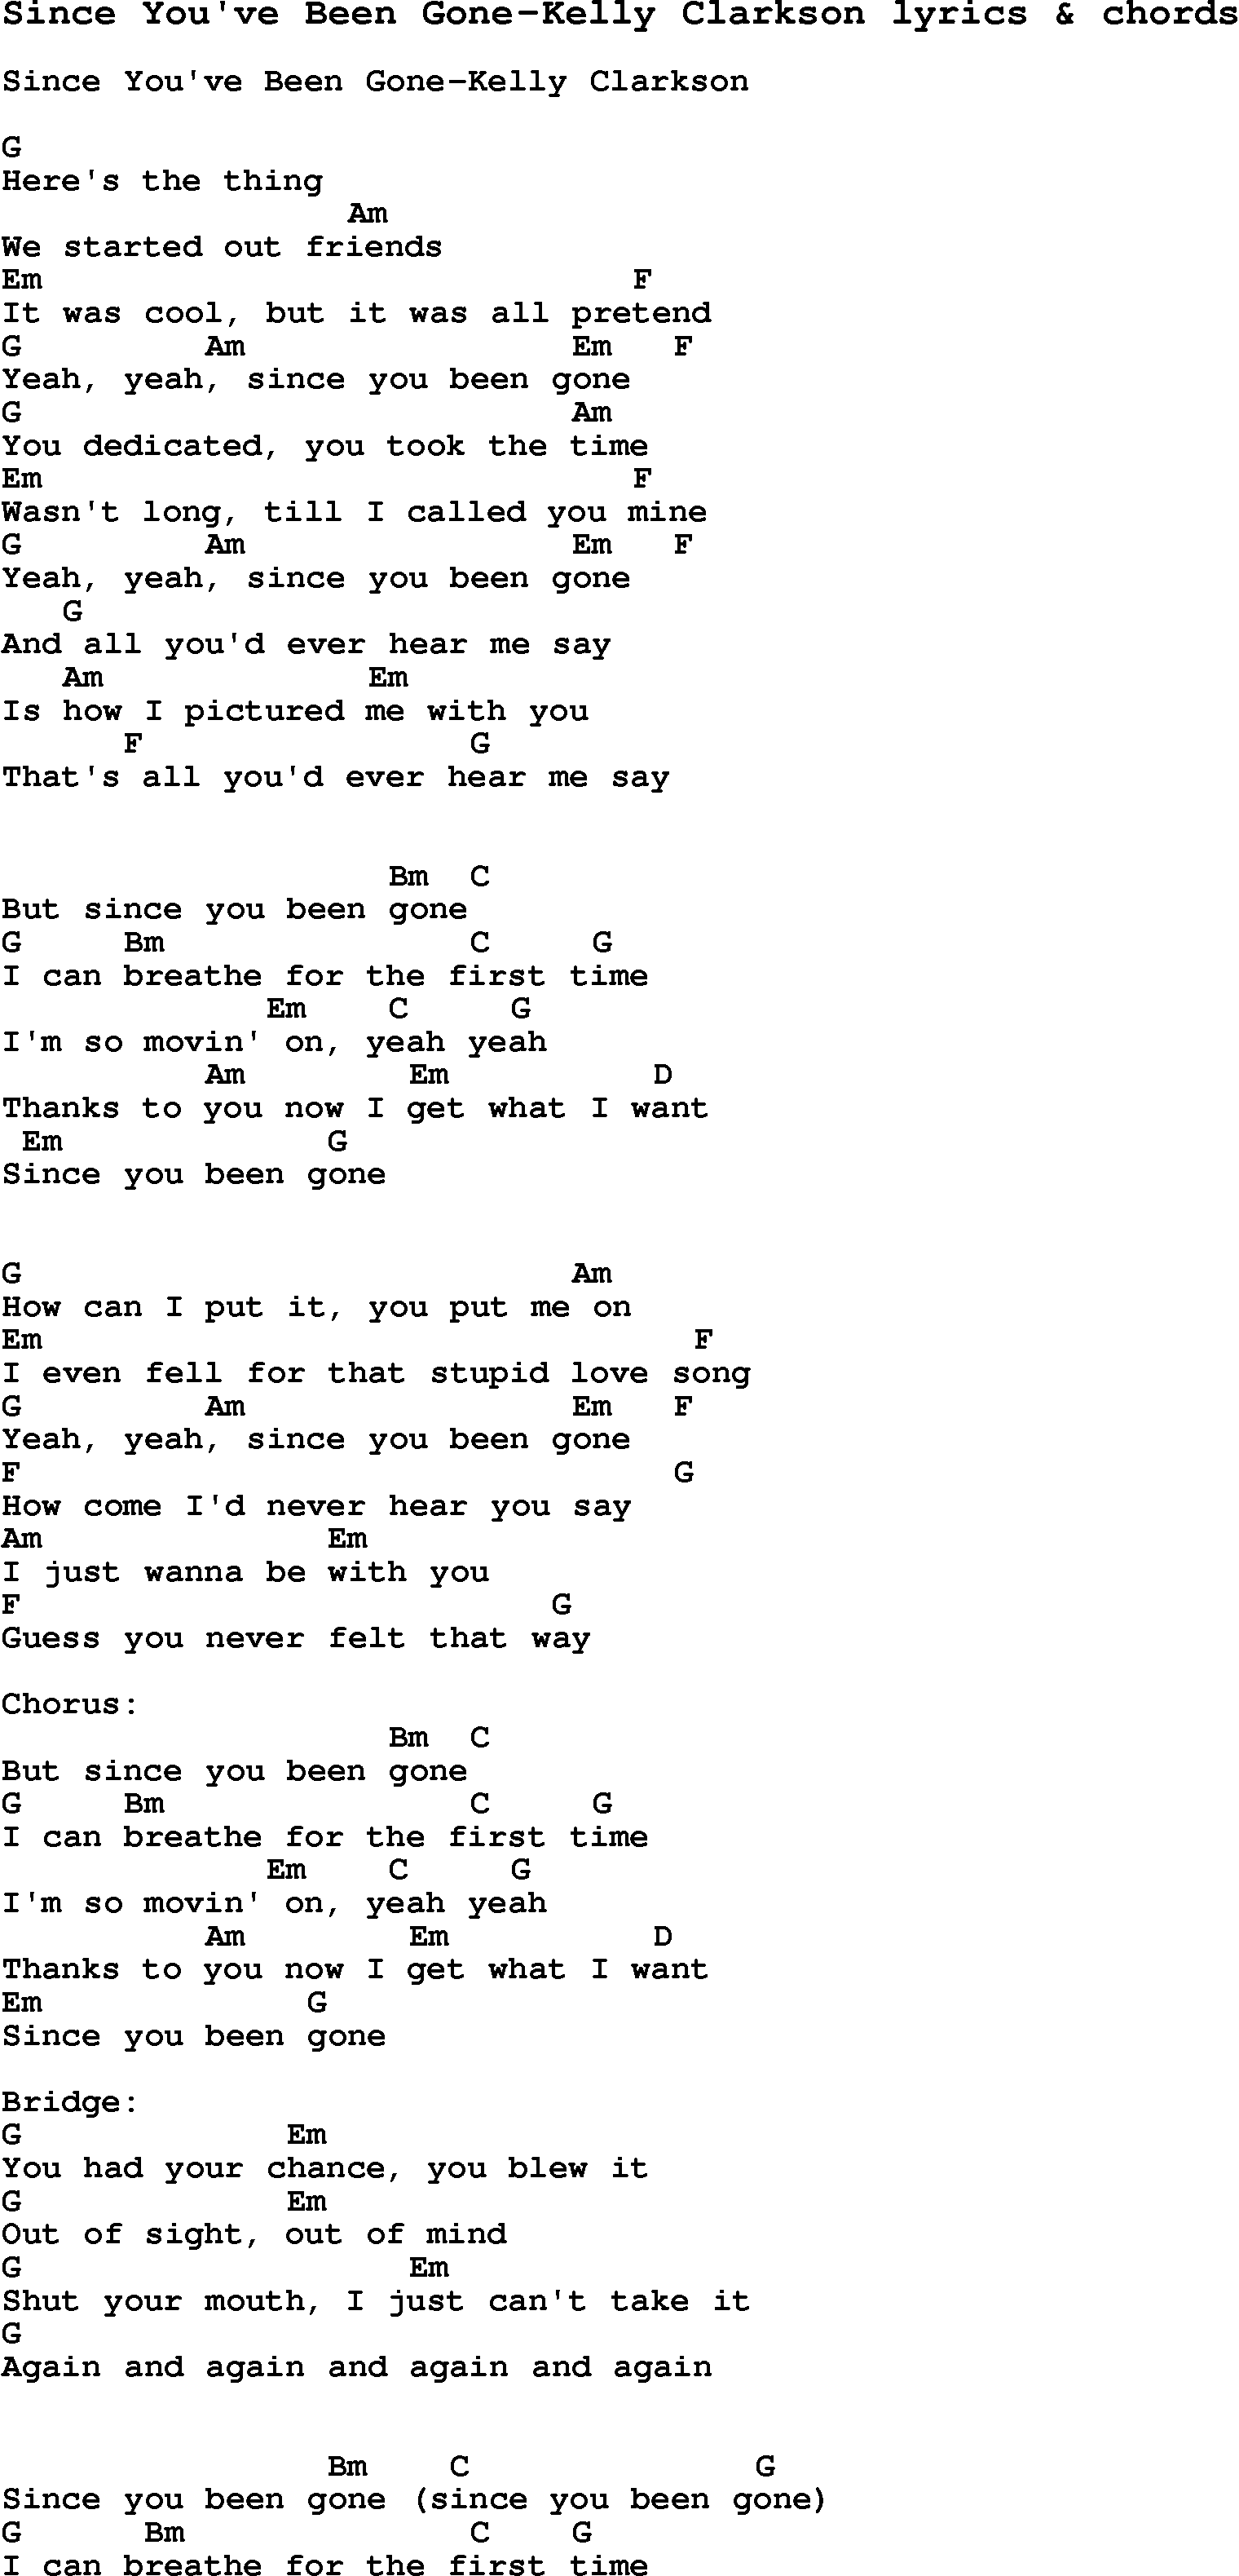 Love Song Lyrics for: Since You've Been Gone-Kelly Clarkson with chords for Ukulele, Guitar Banjo etc.